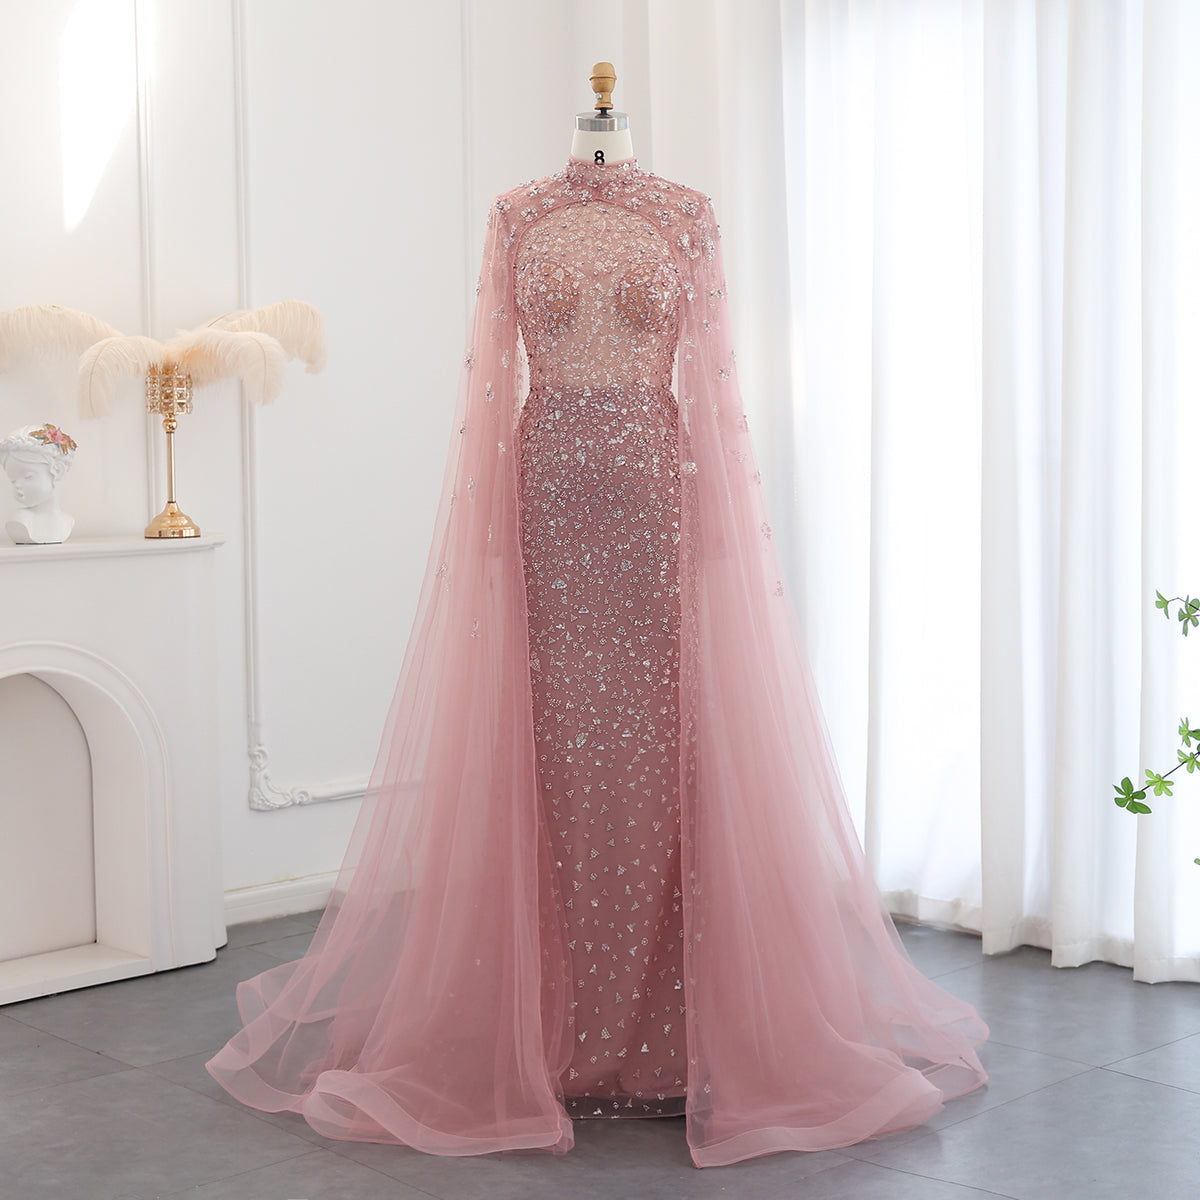 Sharon Said Luxury Dubai Pink Muslim Evening Dress with Cape Long Sleeves Mermaid Sage Green Arab Women Wedding Party Gown SS202